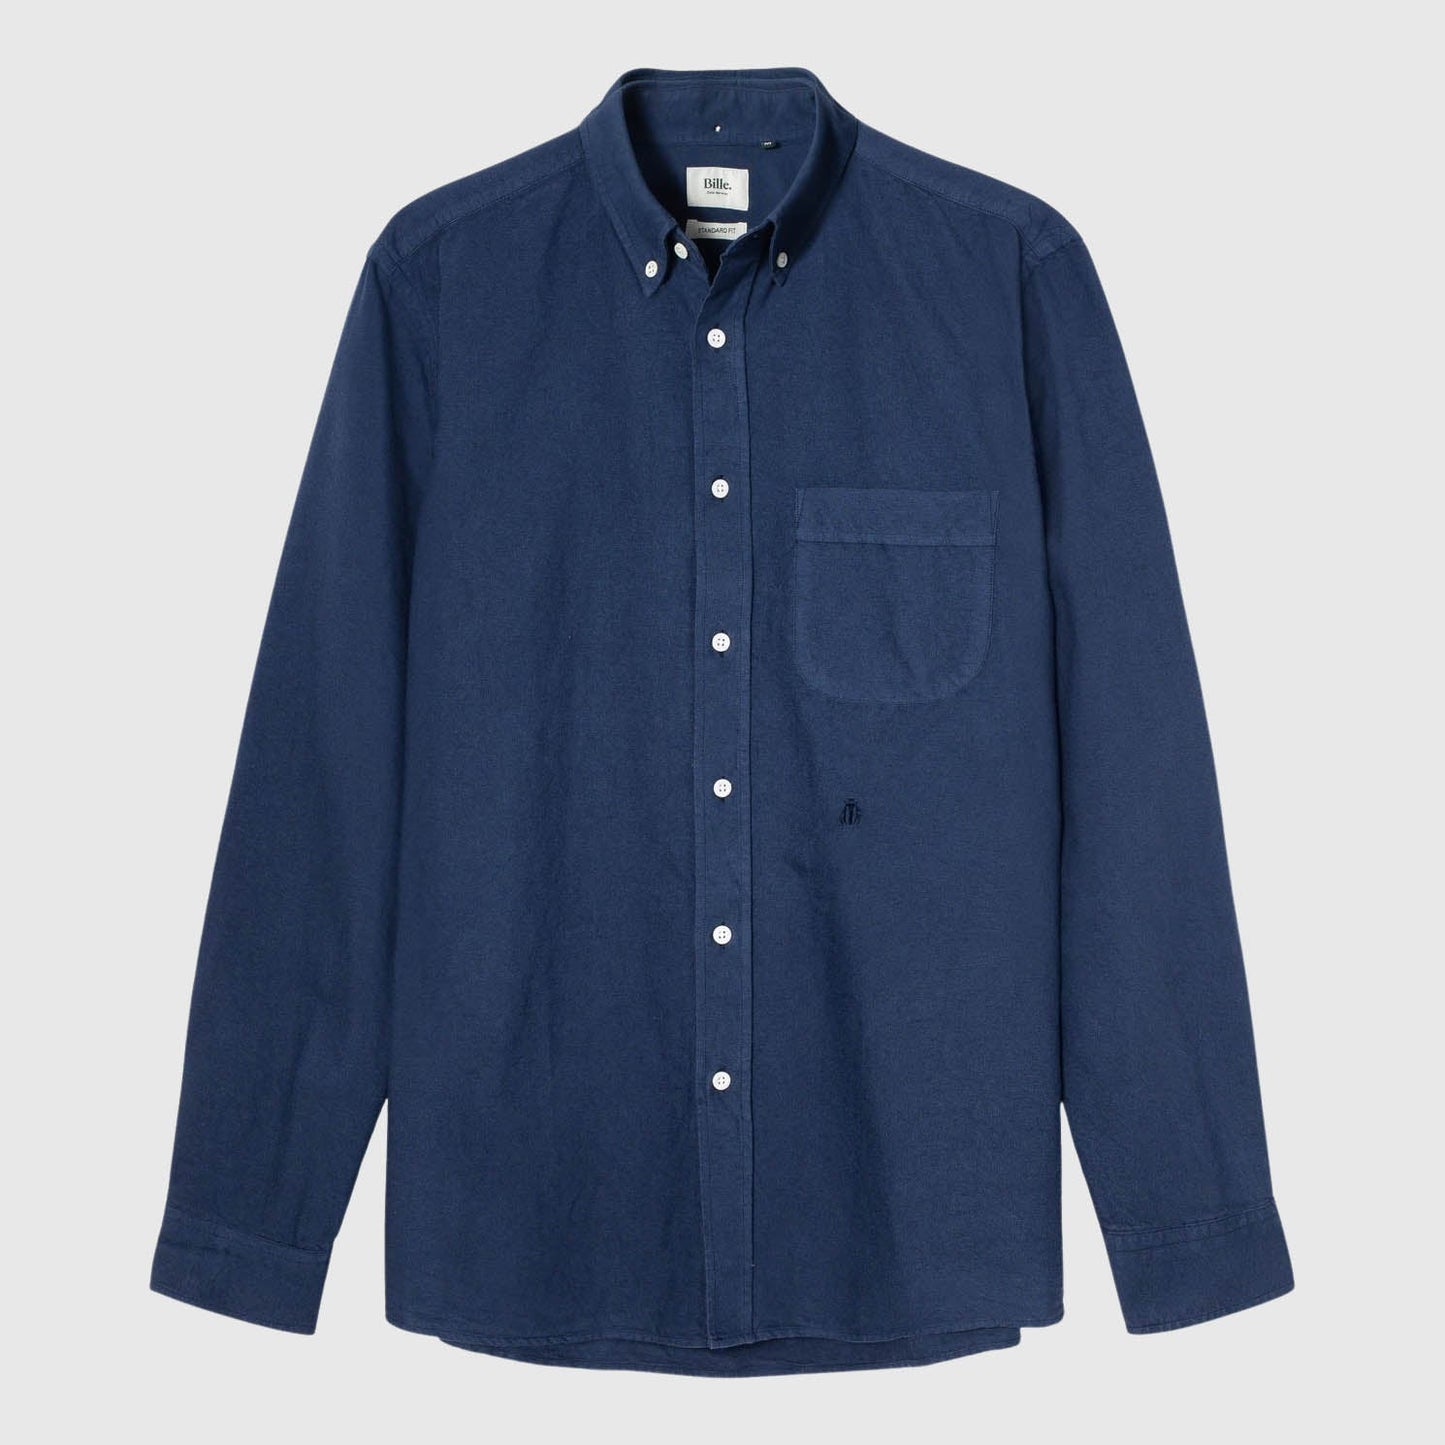 Bille Oxford Shirt - Blue Bille 